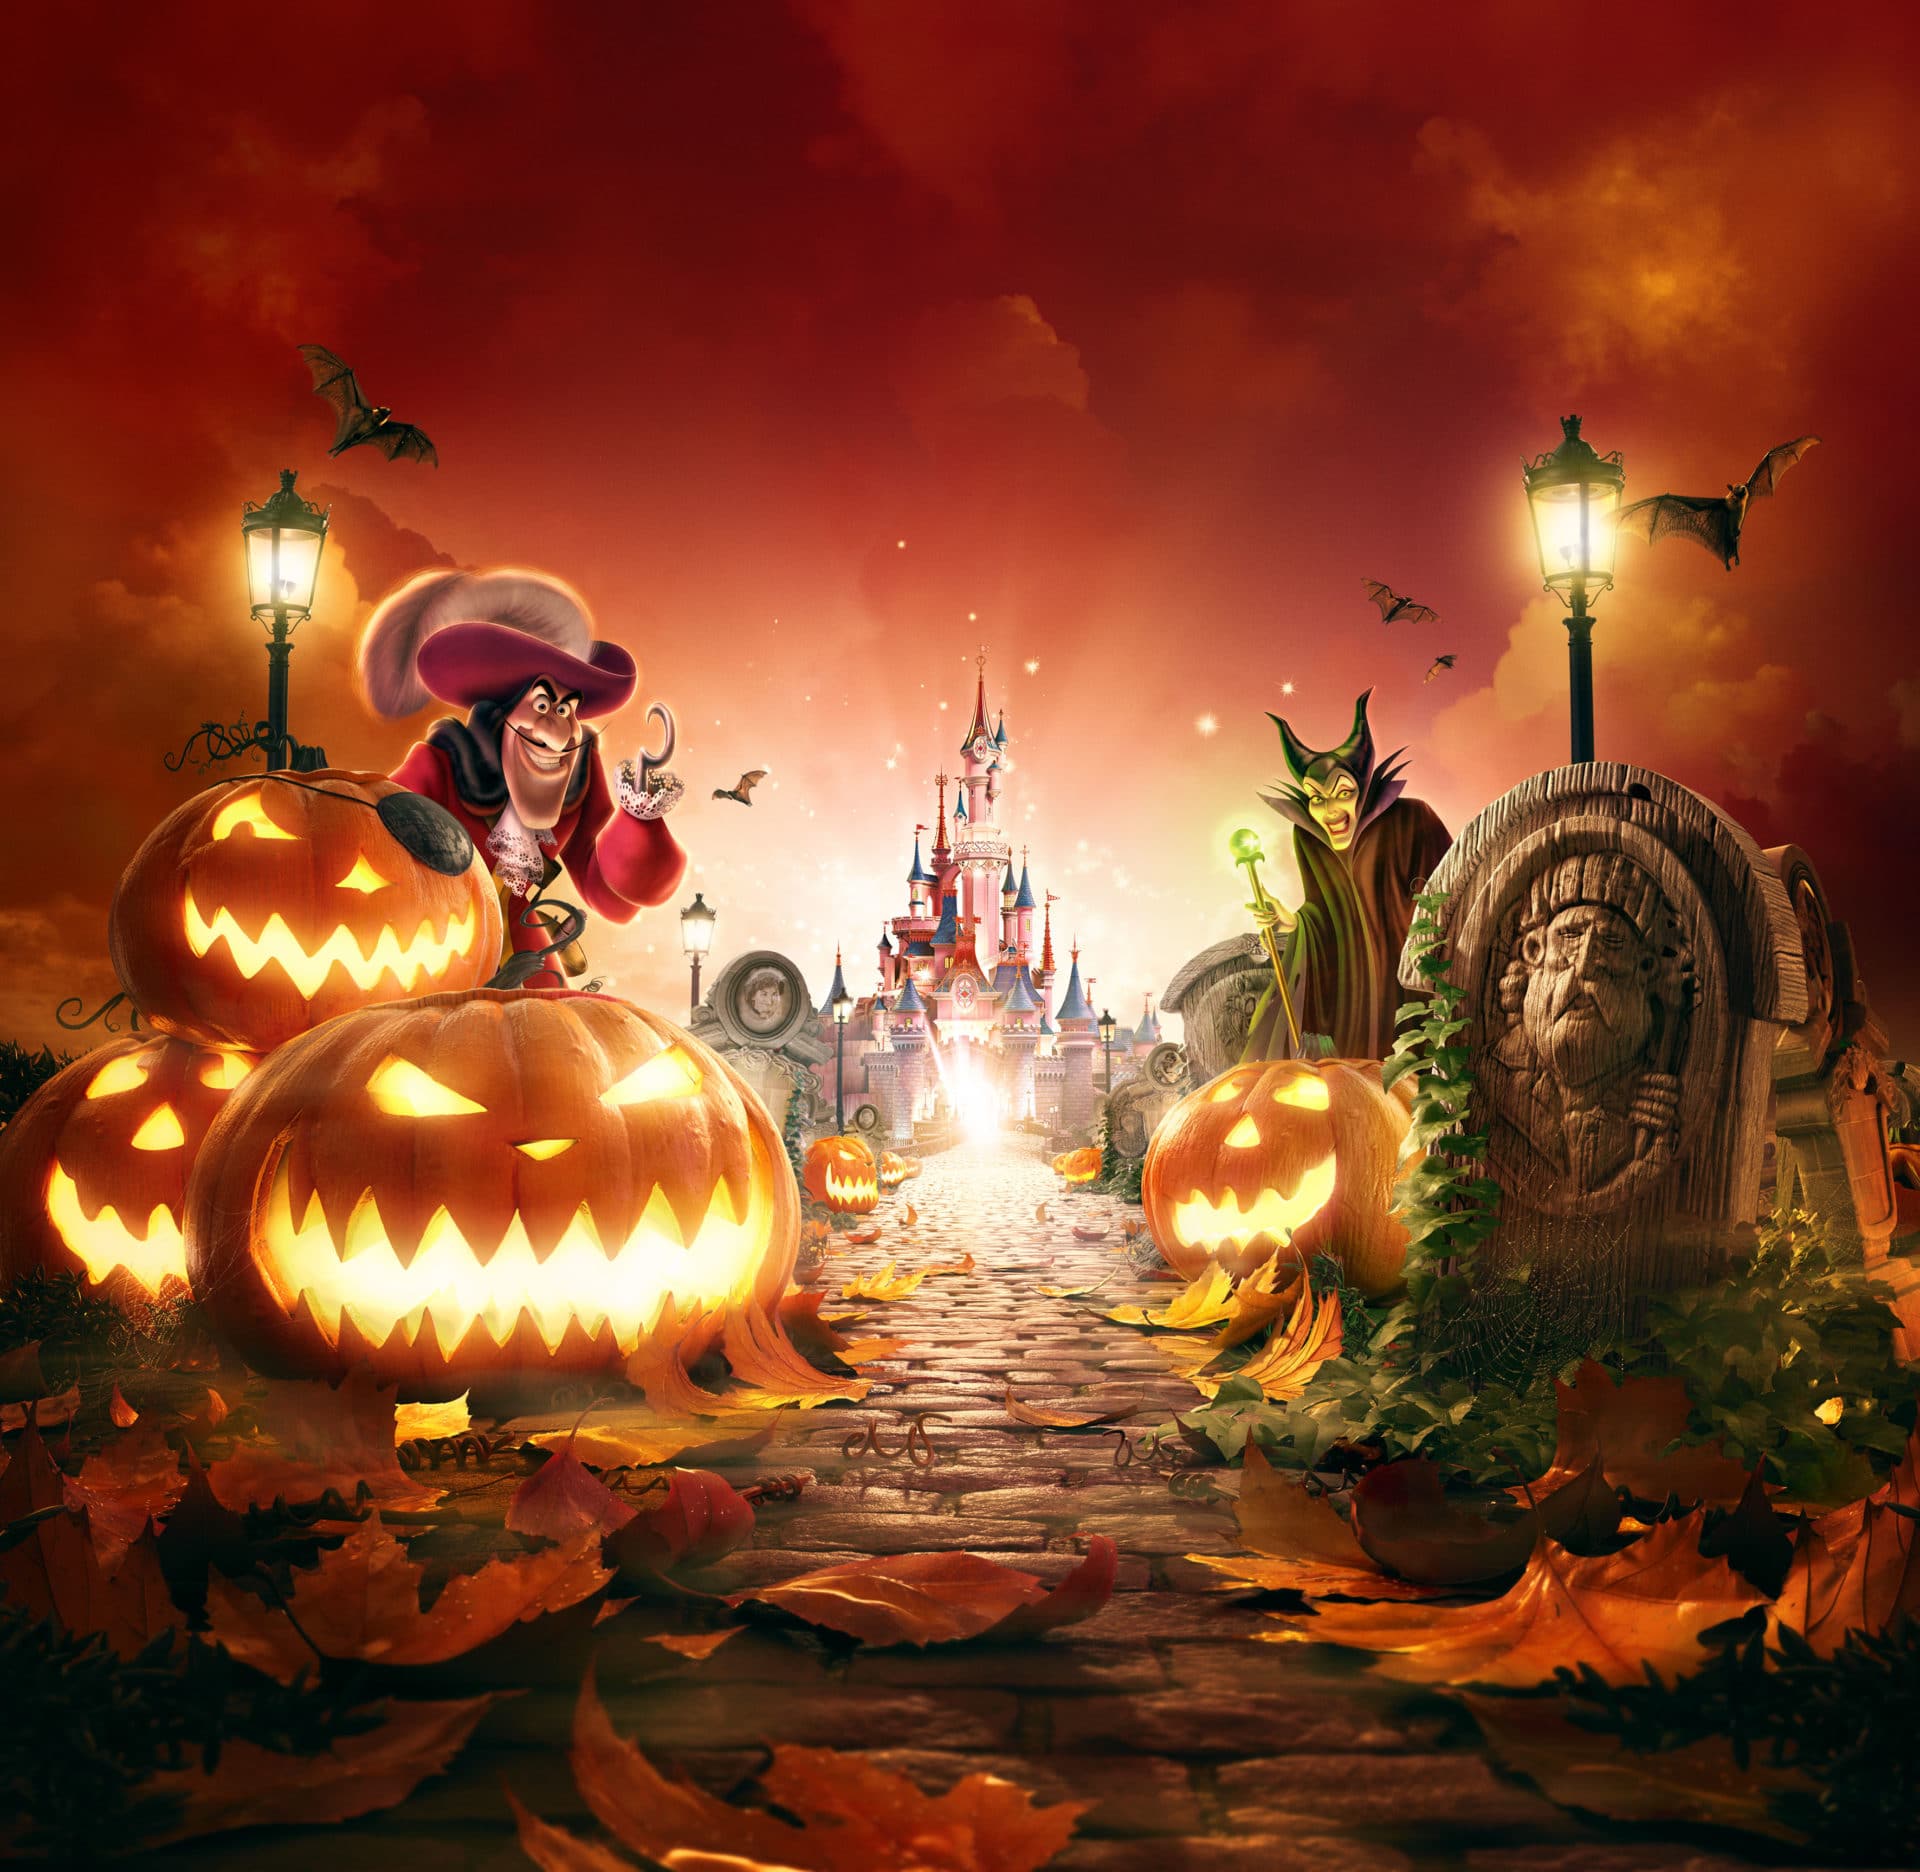 Halloween Disneyland Paris 2017 What to Expect Travel to the Magic